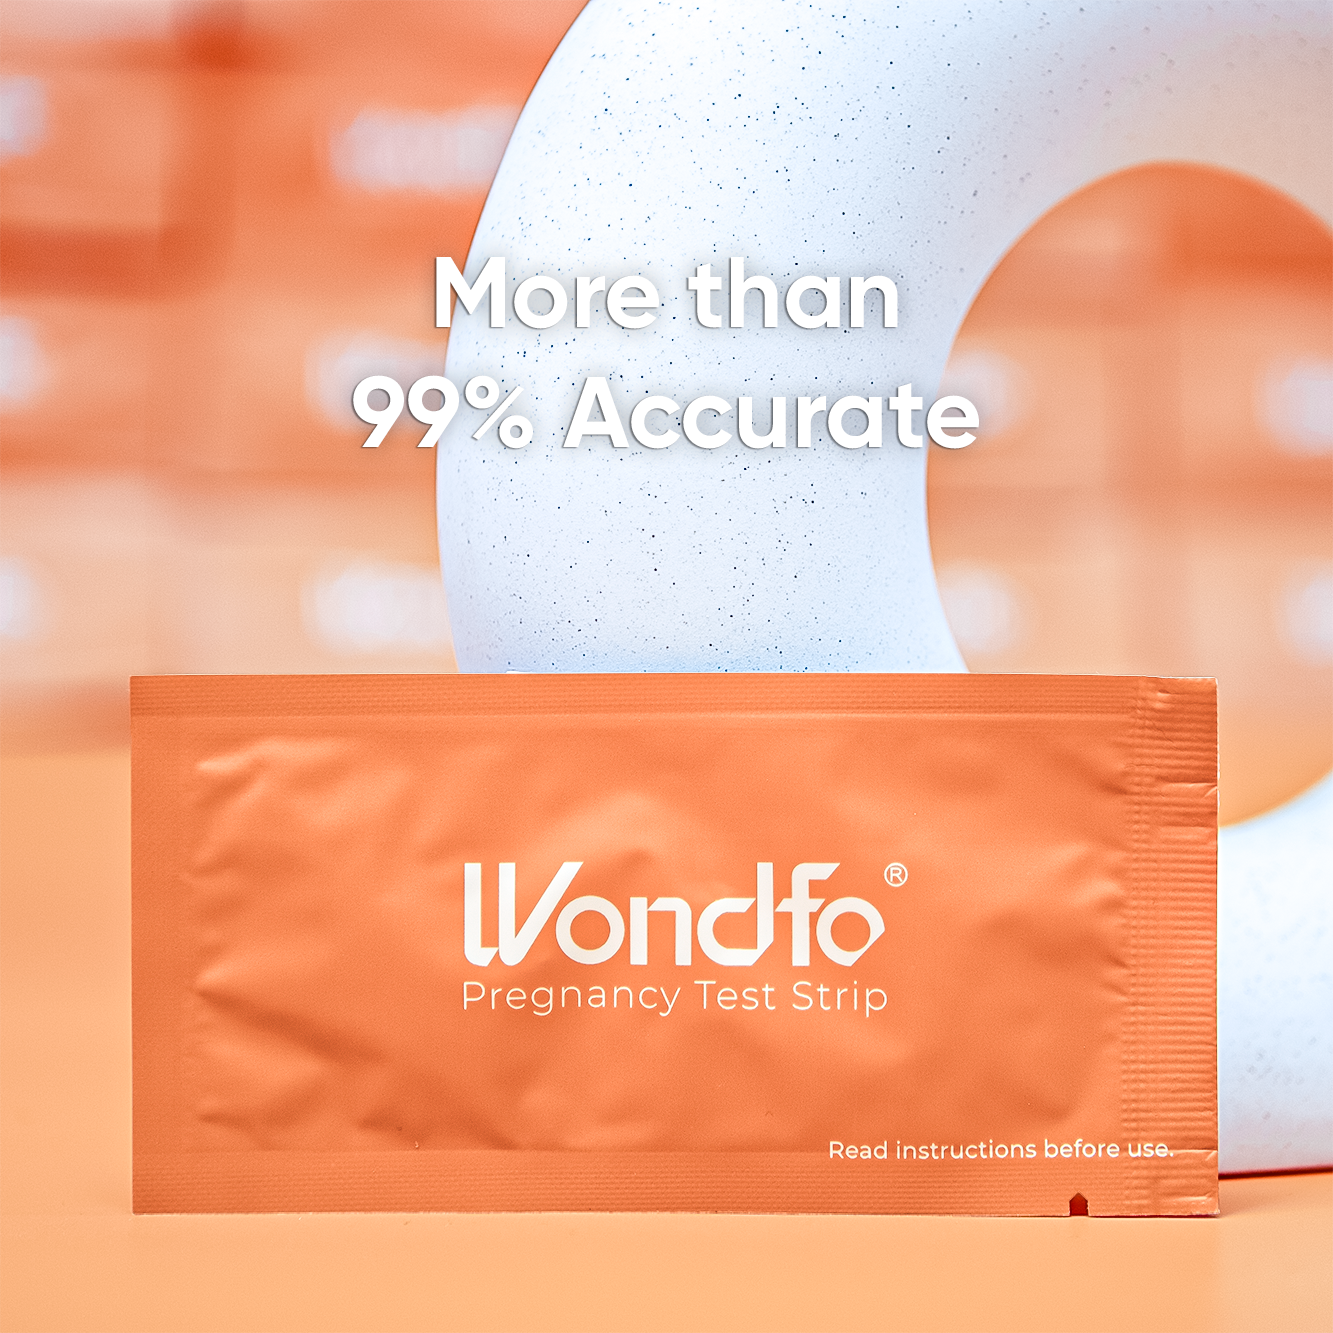 Wondfo Pregnancy Test - 25 Pack